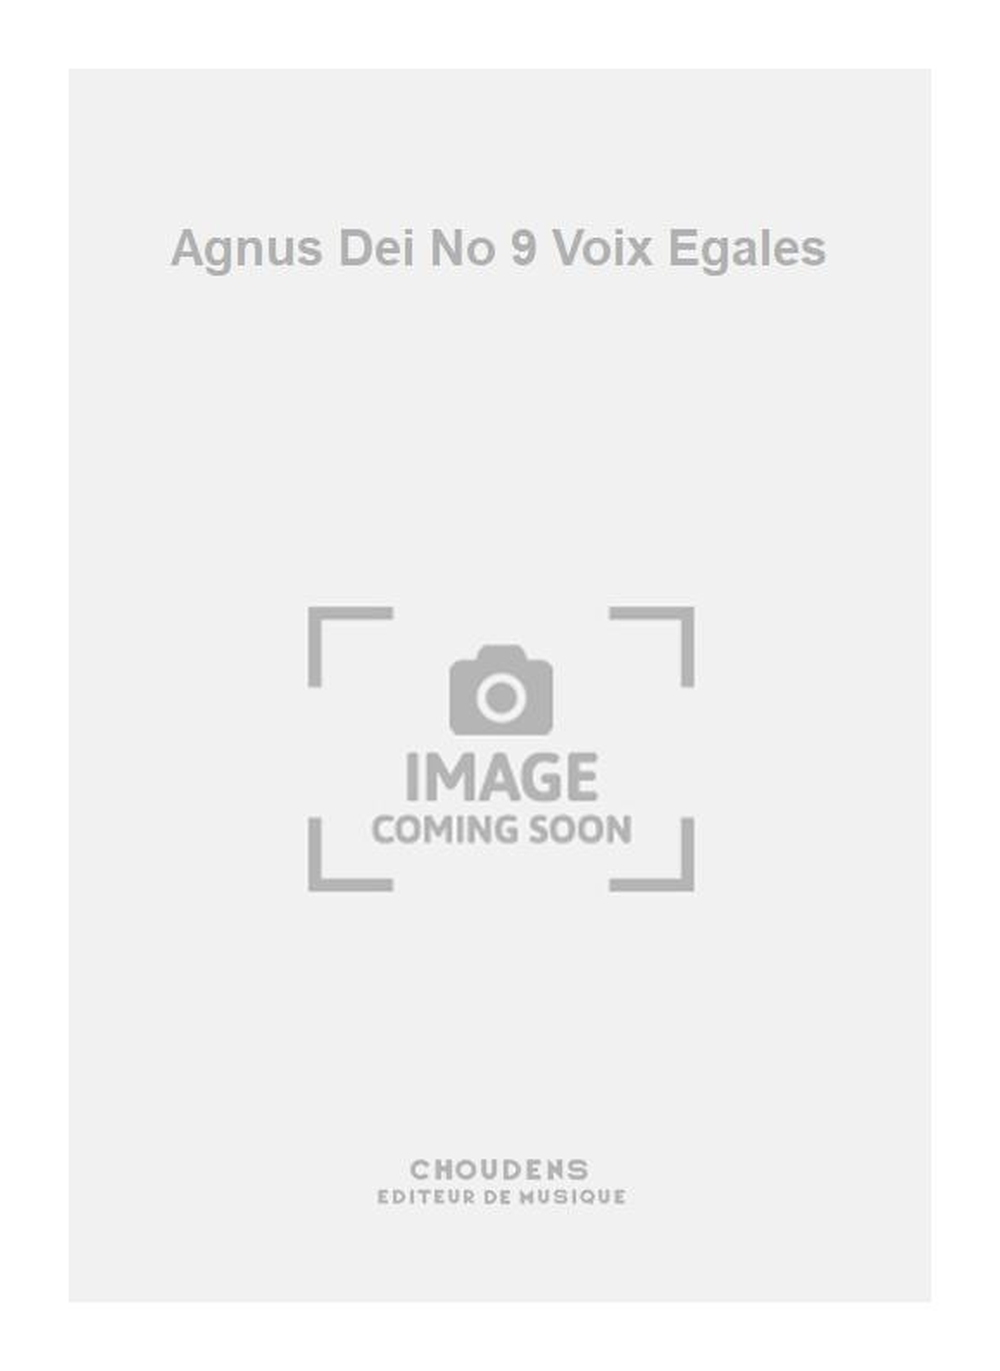 Georges Bizet: Agnus Dei No 9 Voix Egales